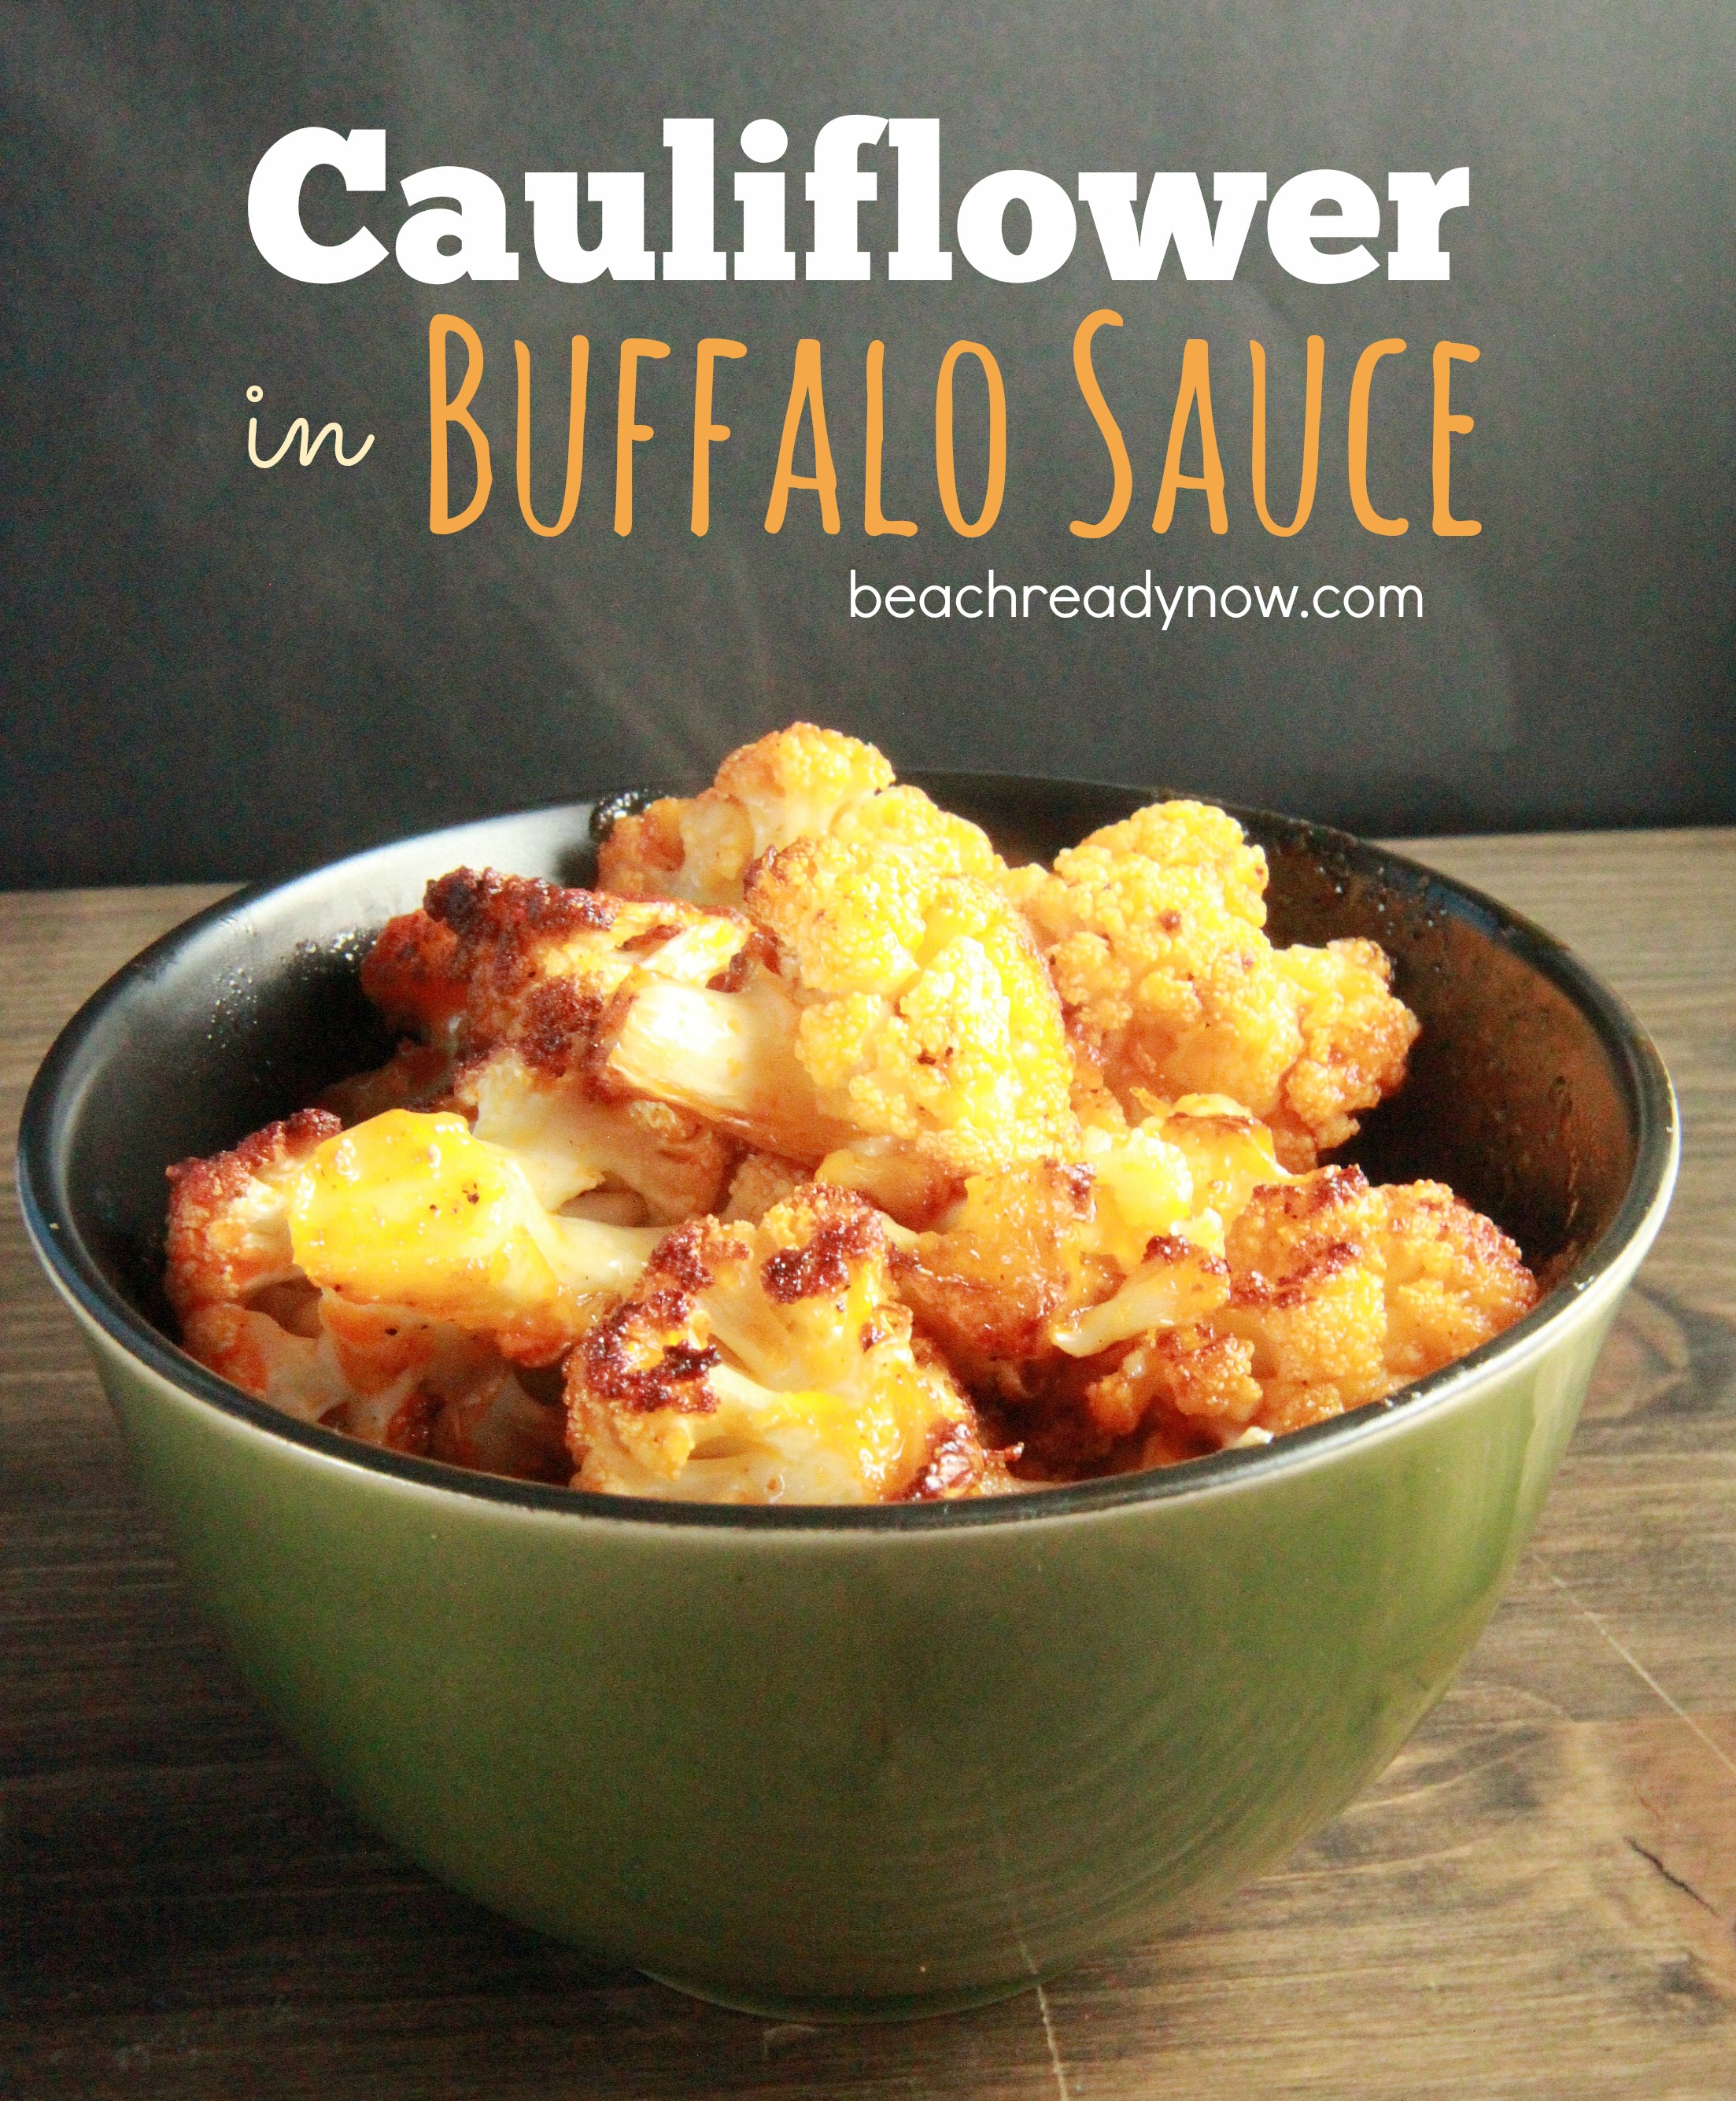 Cauliflower Roasted in Buffalo Sauce